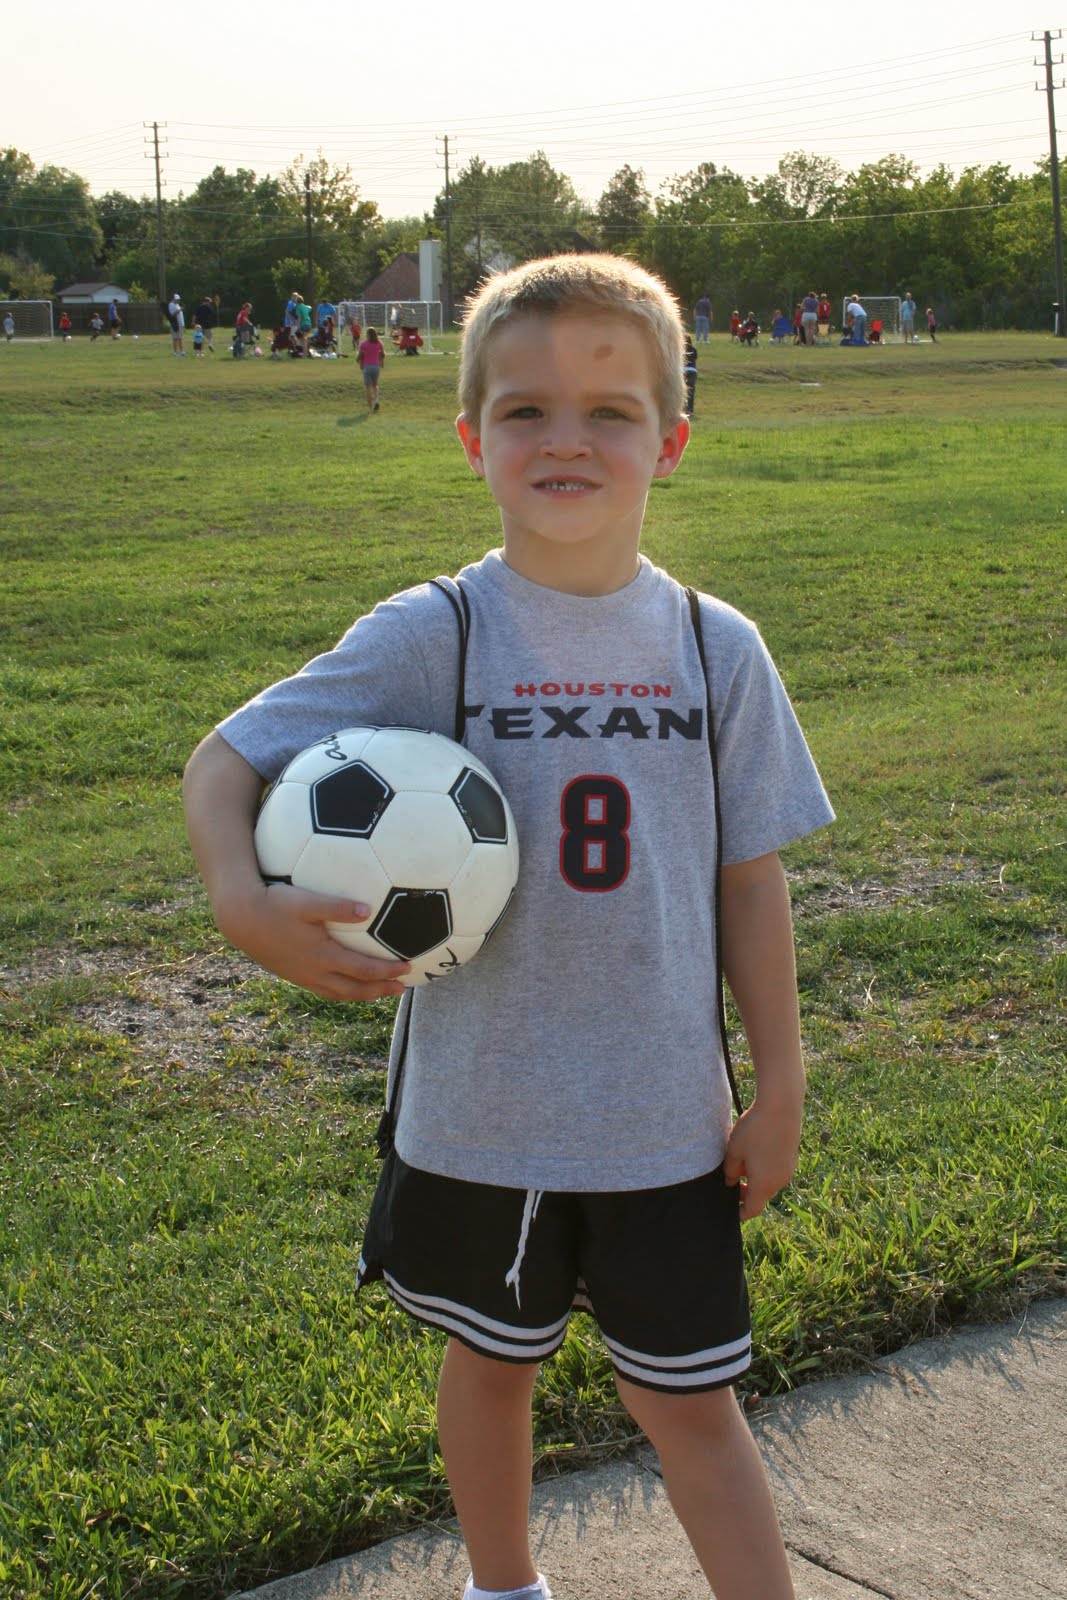 The Allen Insider: Big Boy Soccer Player